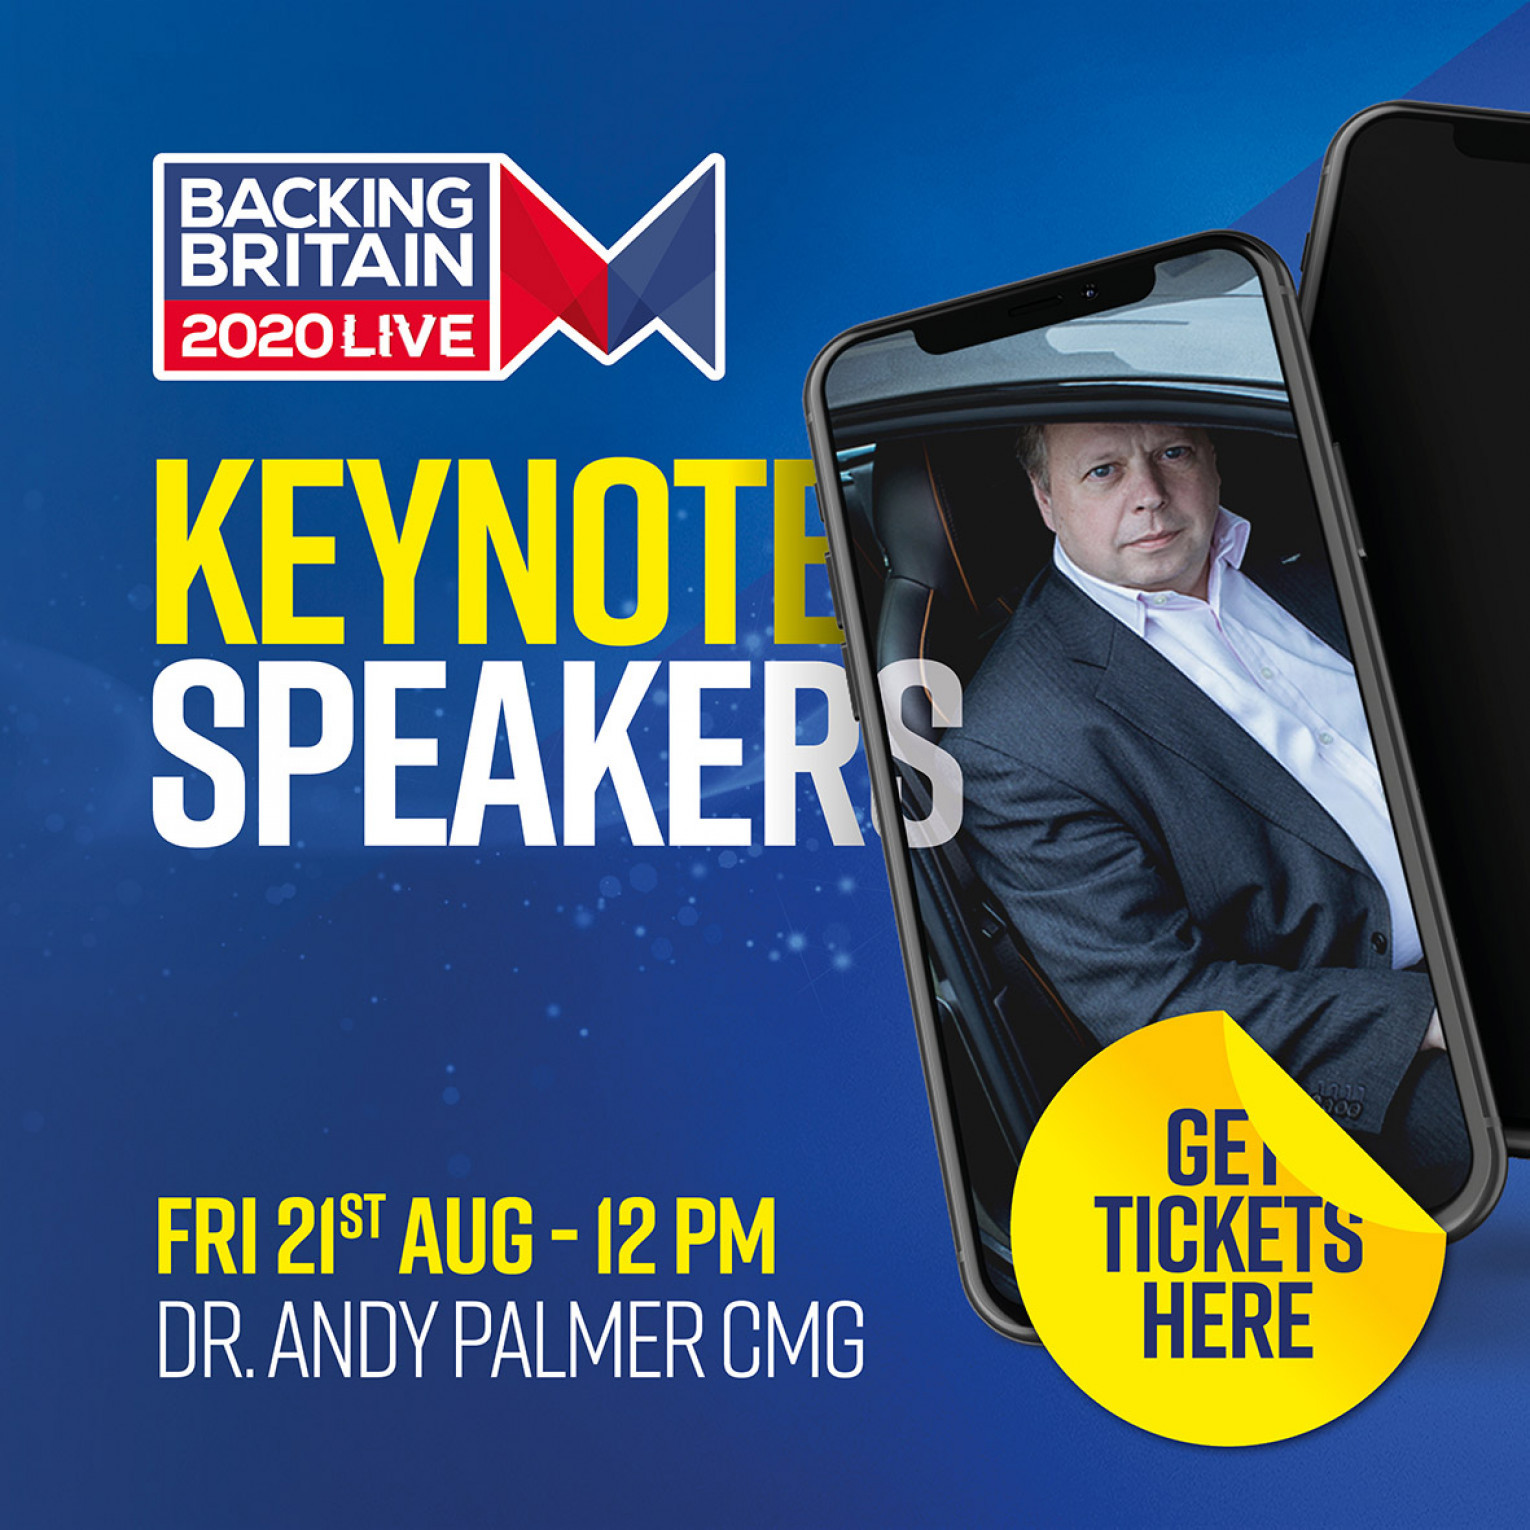 Keynote speaker - Andy Palmer former CEO of Aston Martin